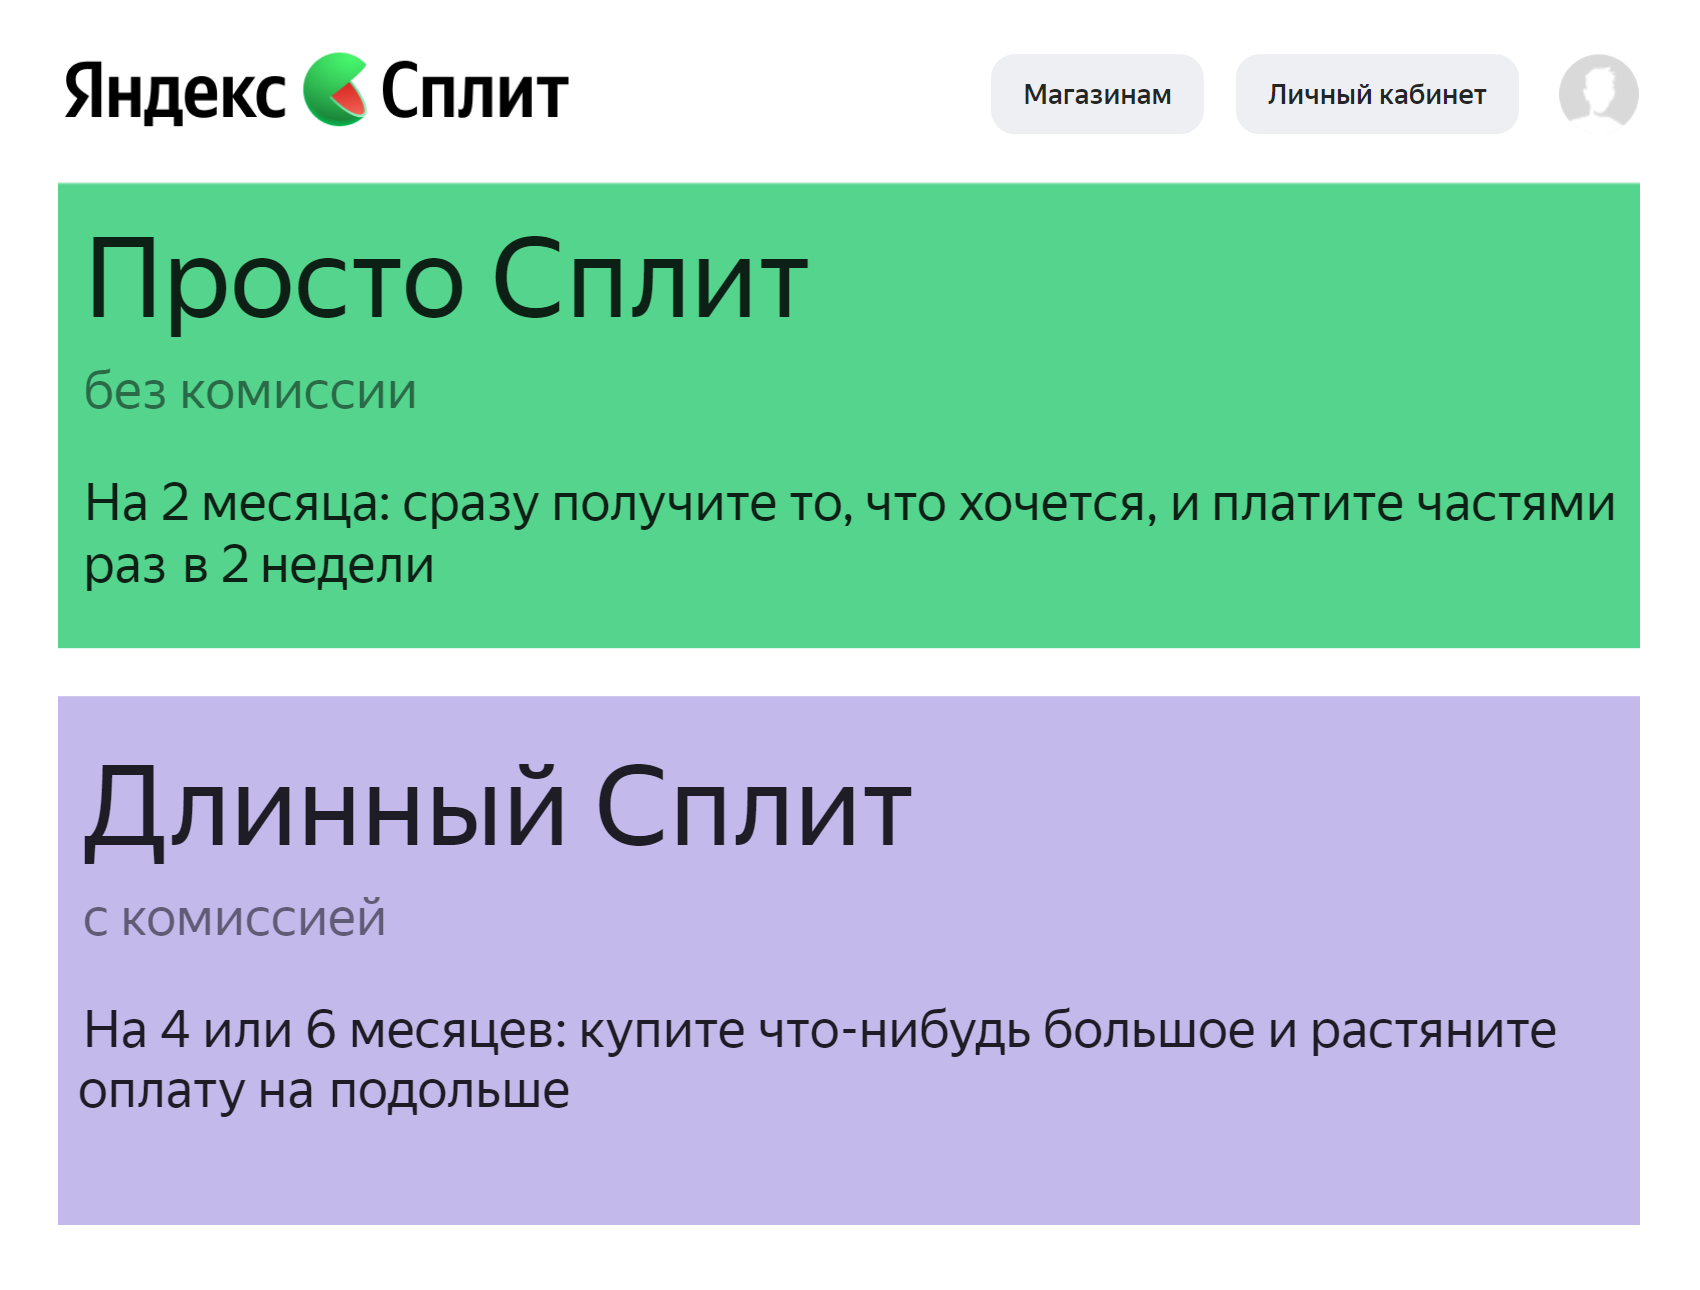 Условия оплаты «Яндекс⁠-⁠сплита». Источник: split.yandex.ru